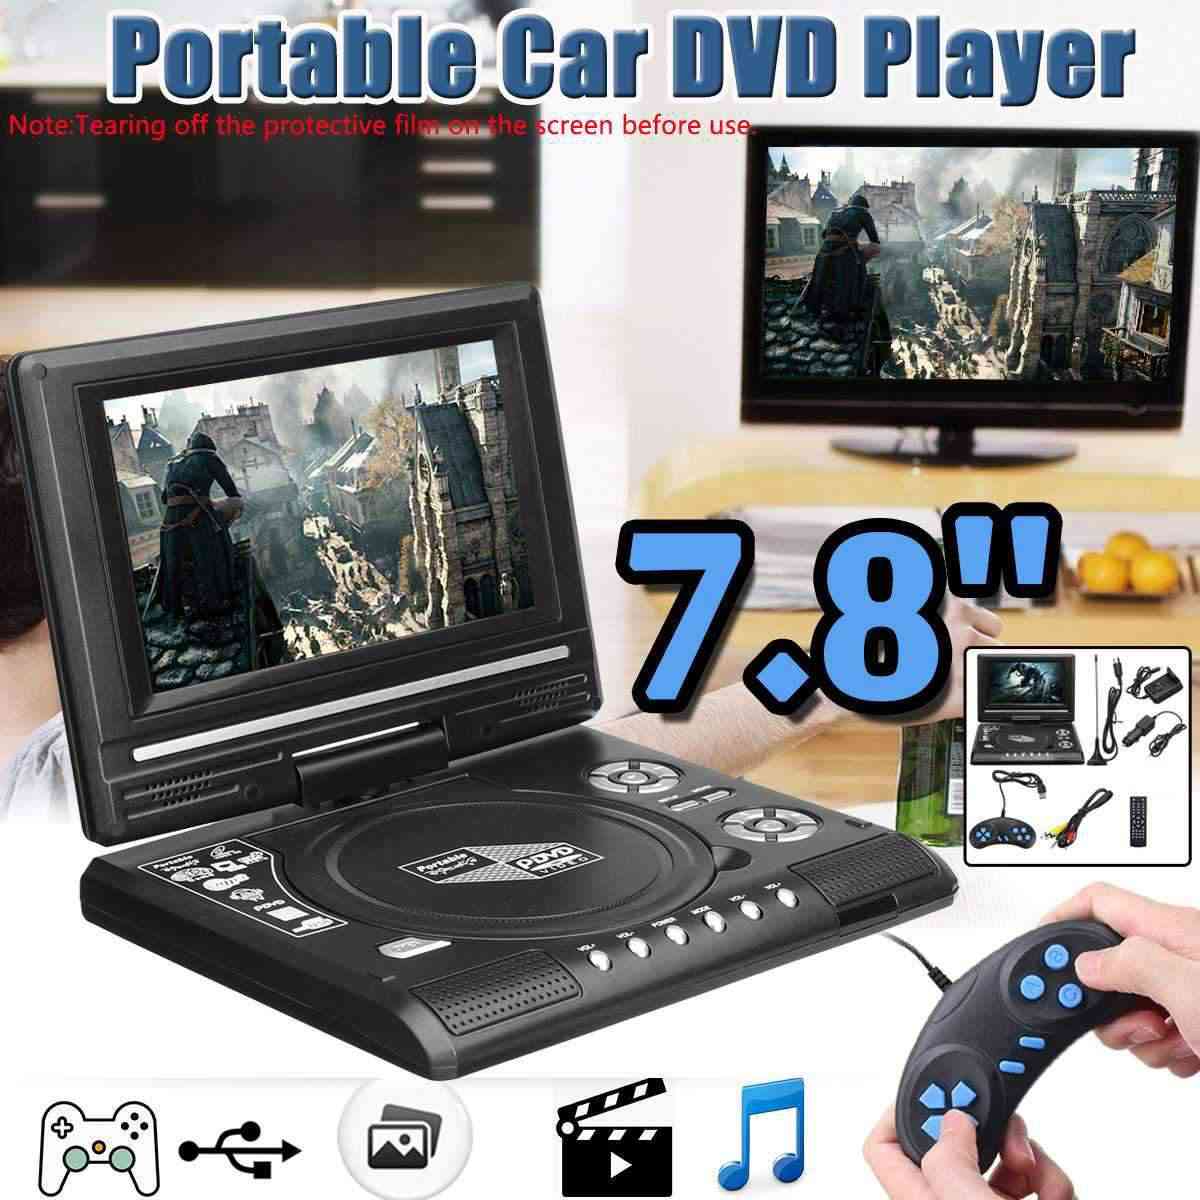 Reproductor de dvd para coche con tv hd de 7.8 pulgadas - reproductor de vcd, cd, mp3, dvd tarjetas sd usb cable portatil de tv rca -